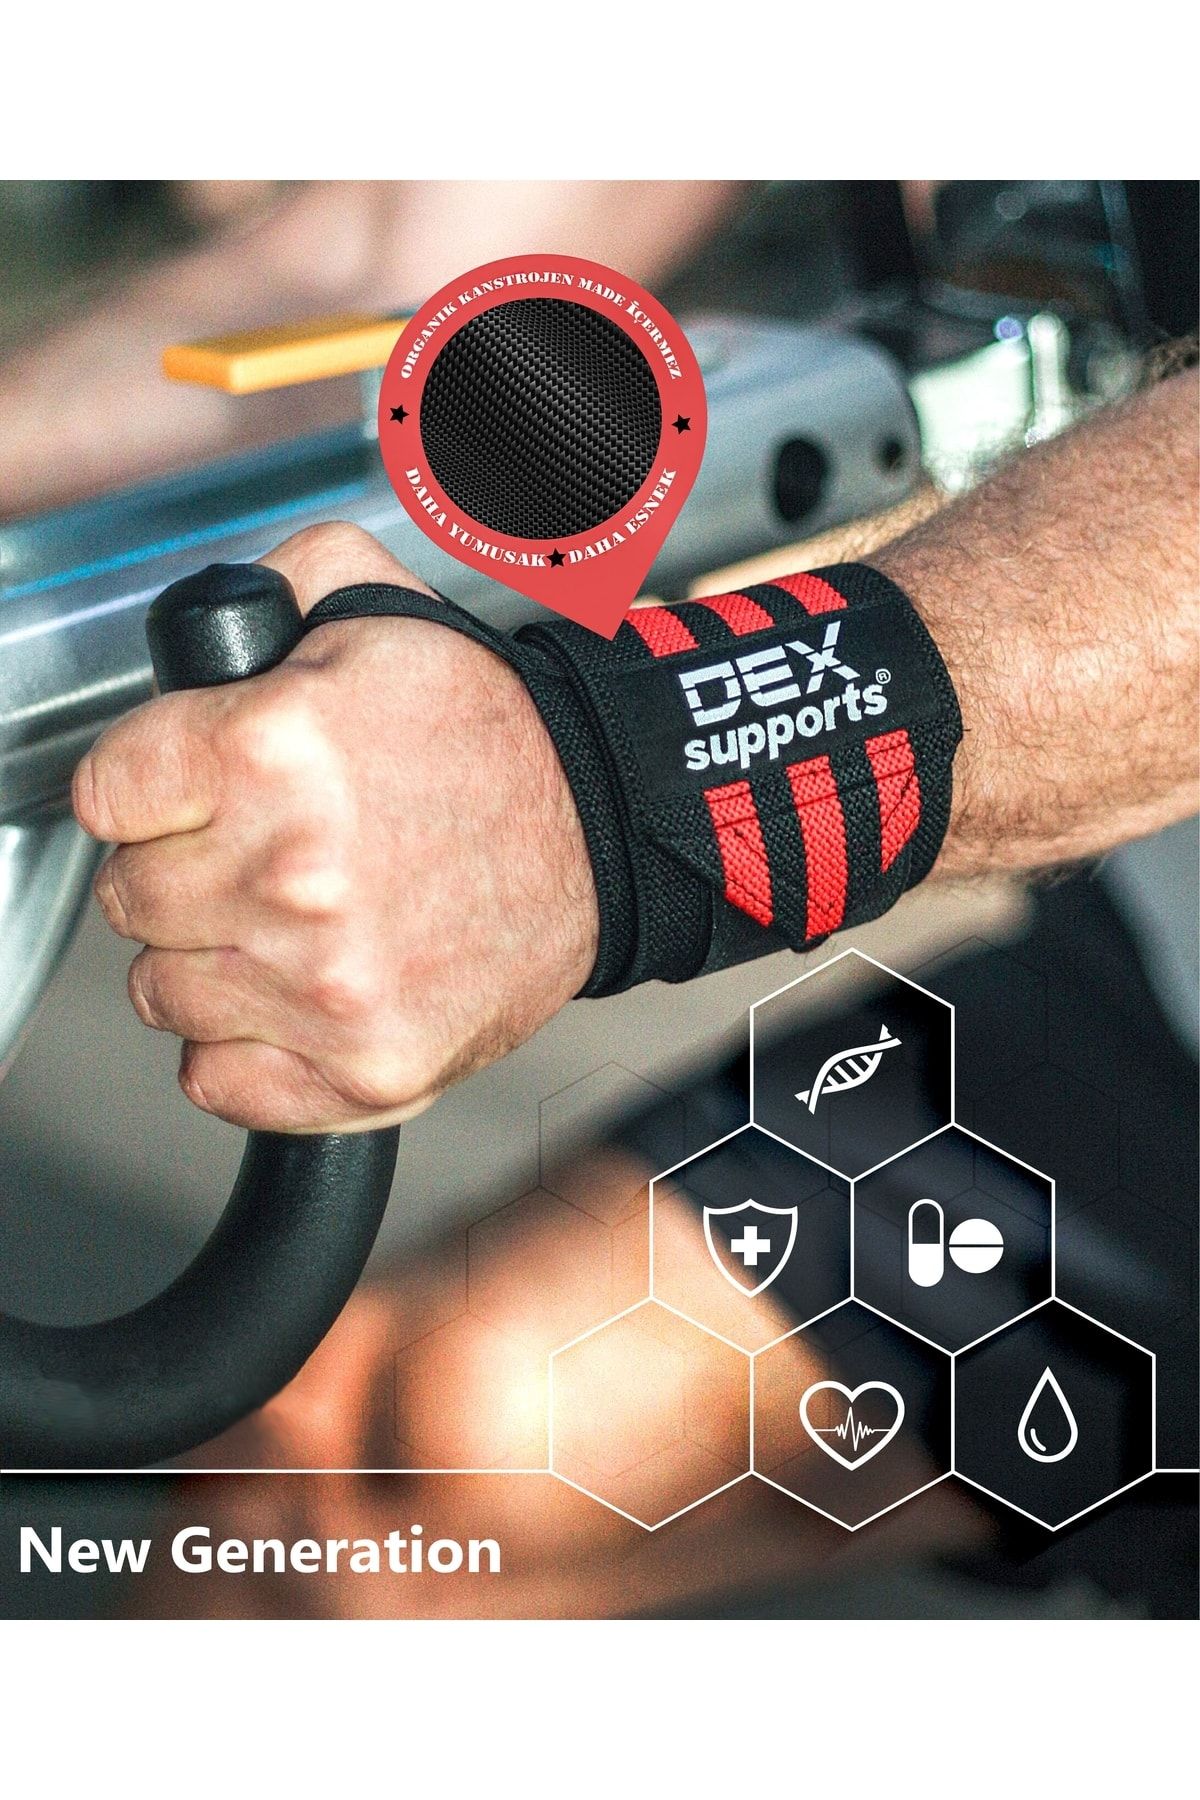 Dex Supports Lasting Energy Fitness Bilek Sargısı , Wrist Wraps , Spor Bileklik 2’li Paket